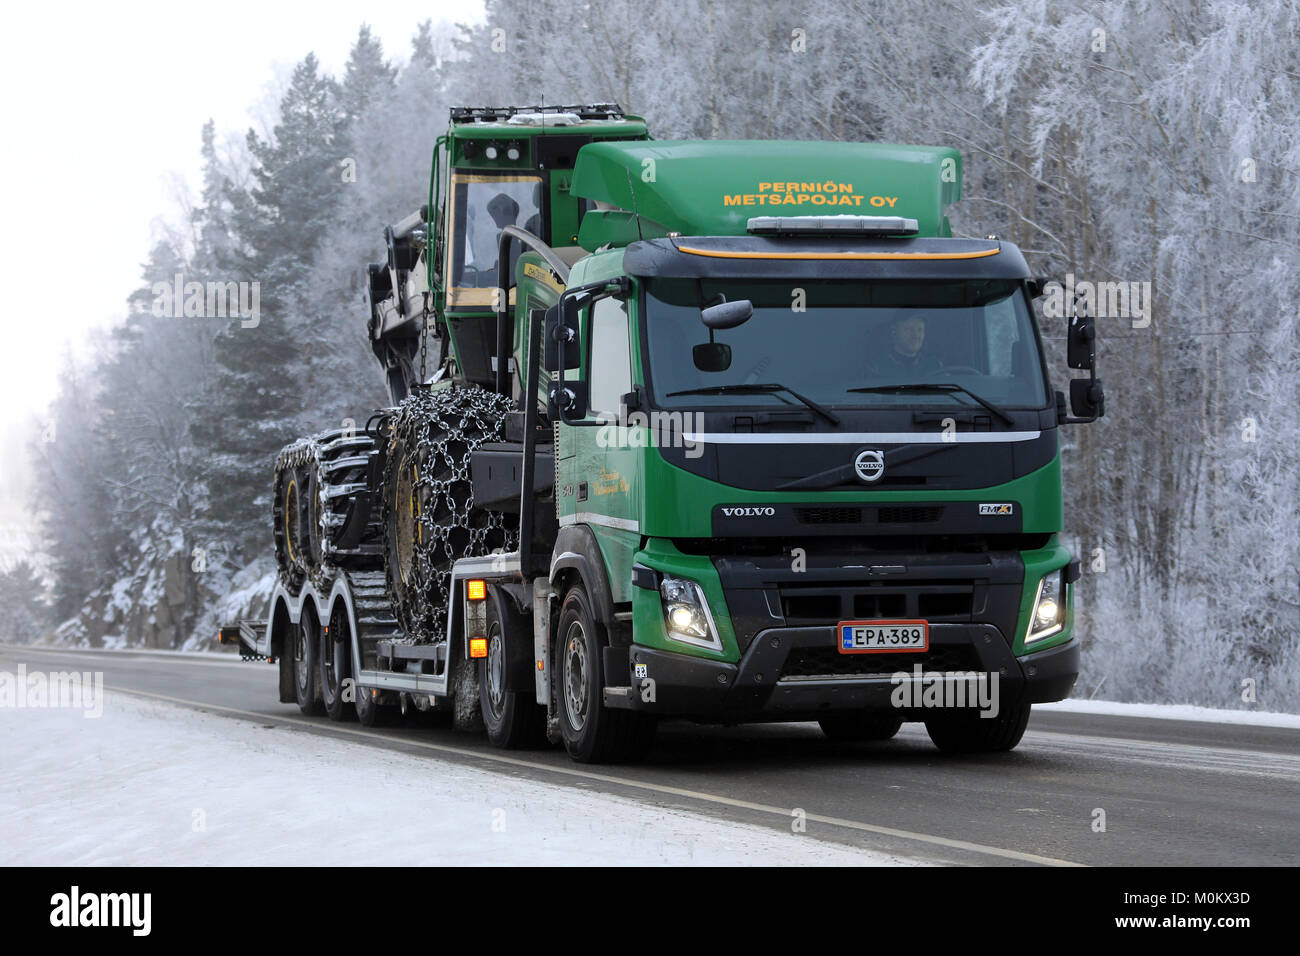 SALO, FINNLAND - Januar 20, 2018: Grün Volvo FMX Lkw hols John Deere Forstmaschinen auf Anhänger entlang der Landstraße im Winter Nebel. Stockfoto